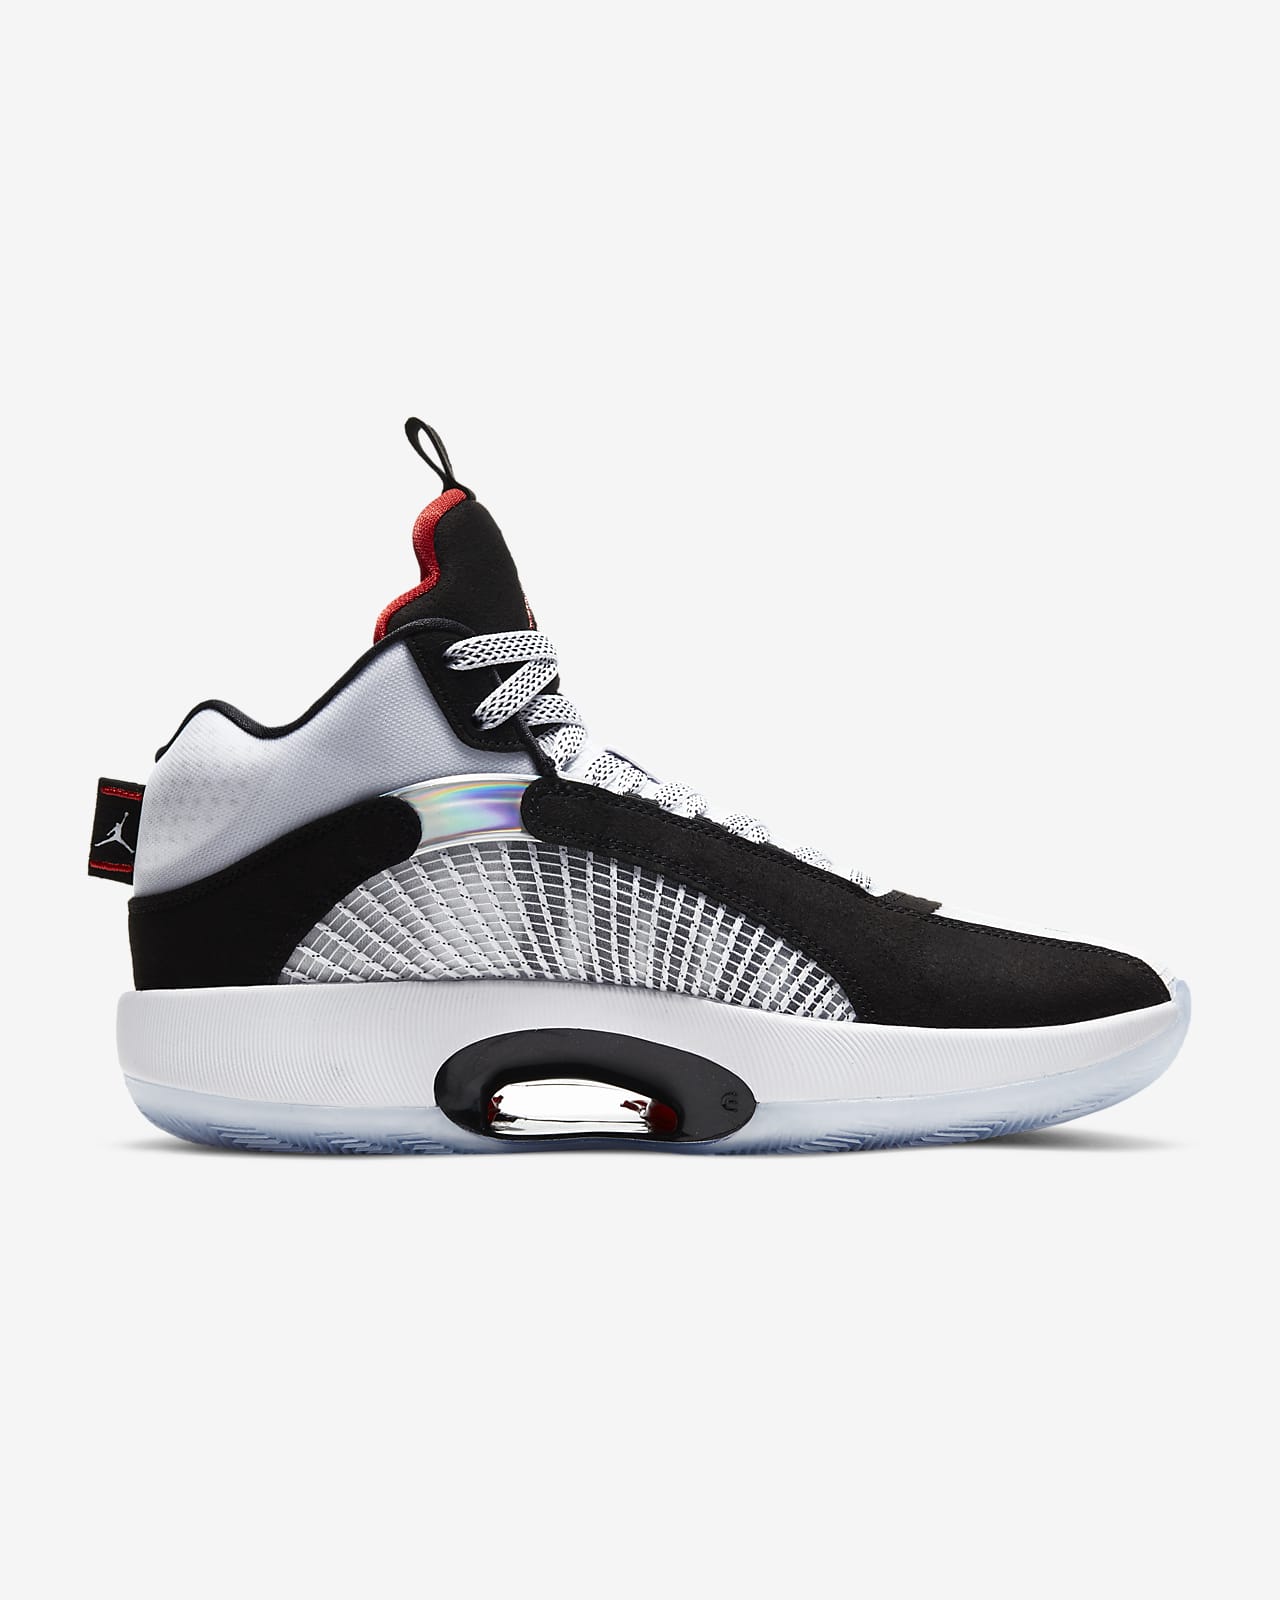 Air Jordan XXXV “DNA”. Nike 